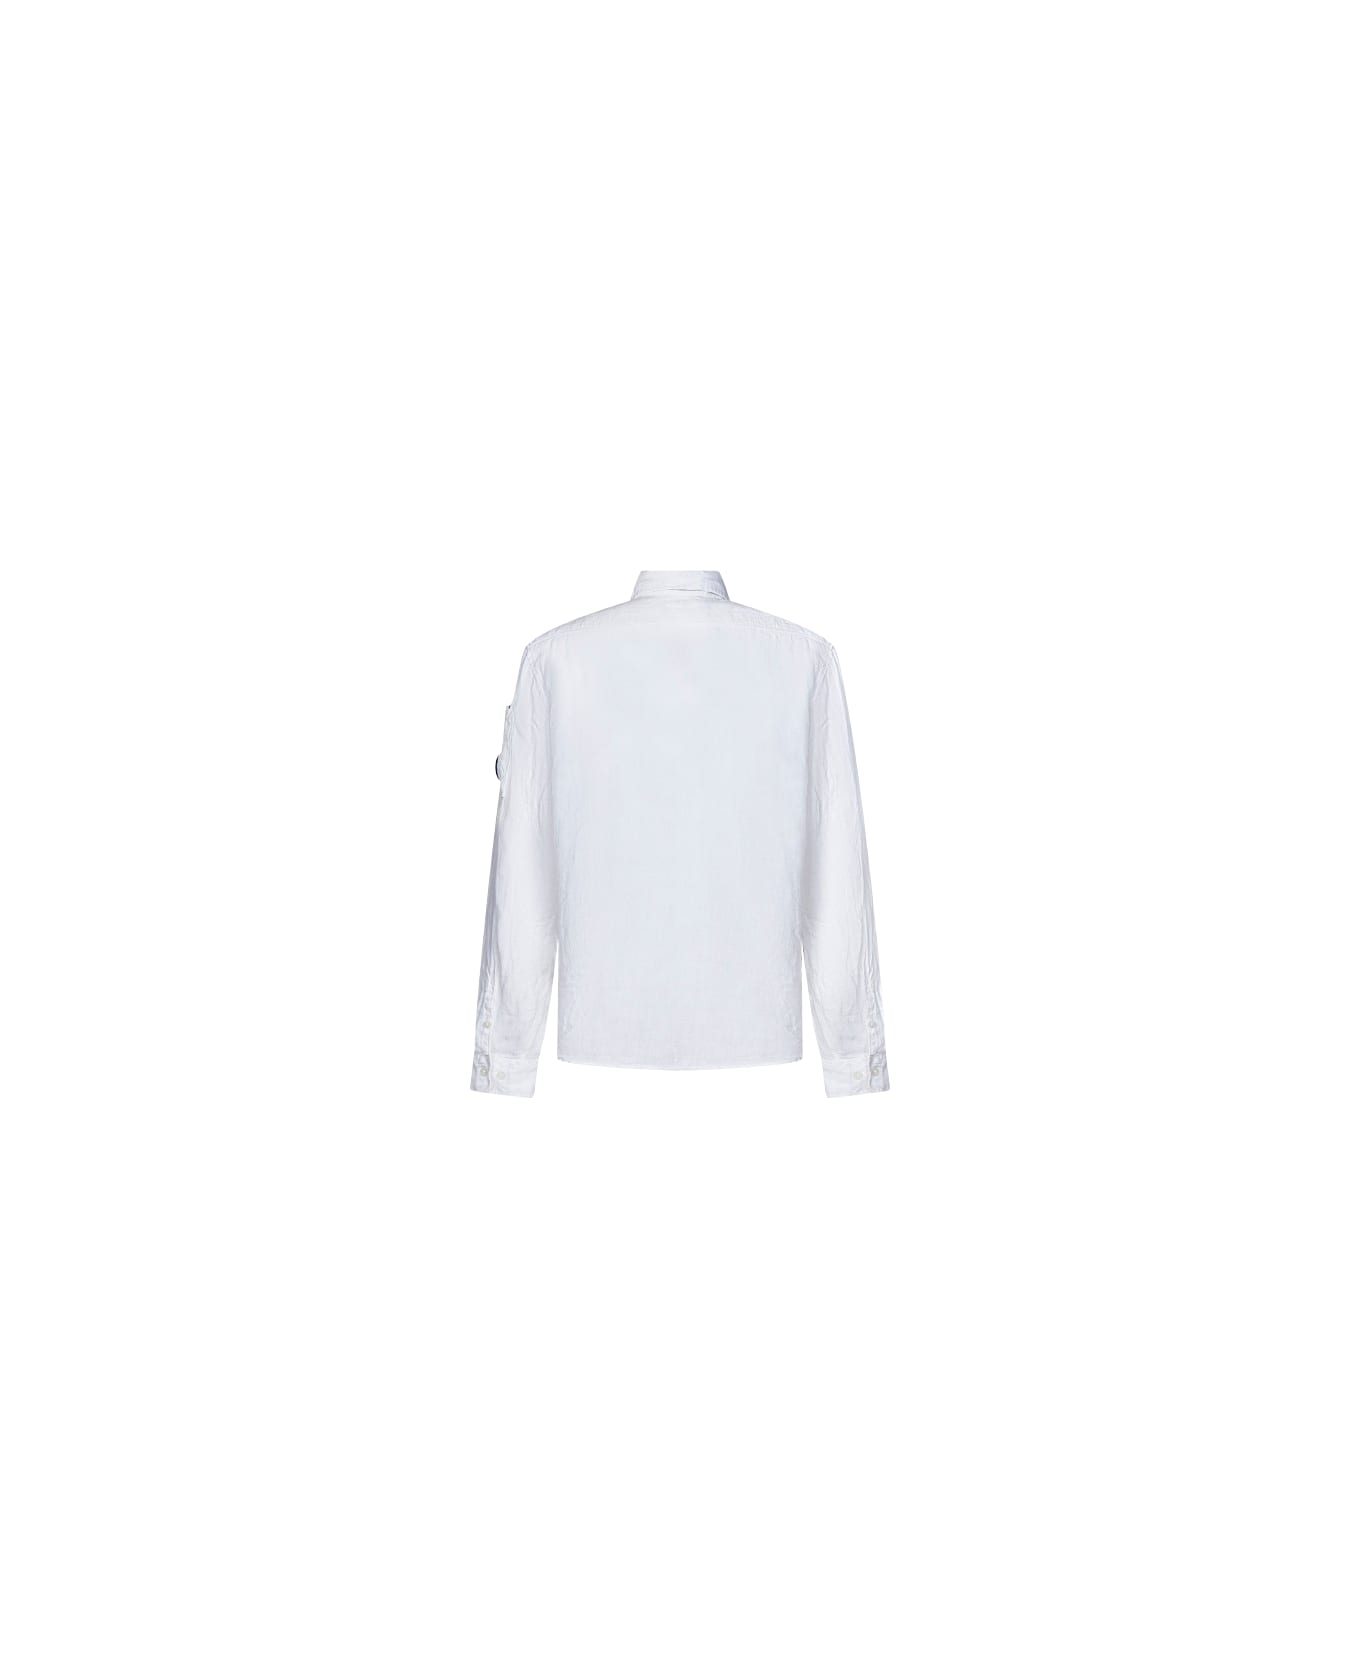 C.P. Company Shirt - Bianco